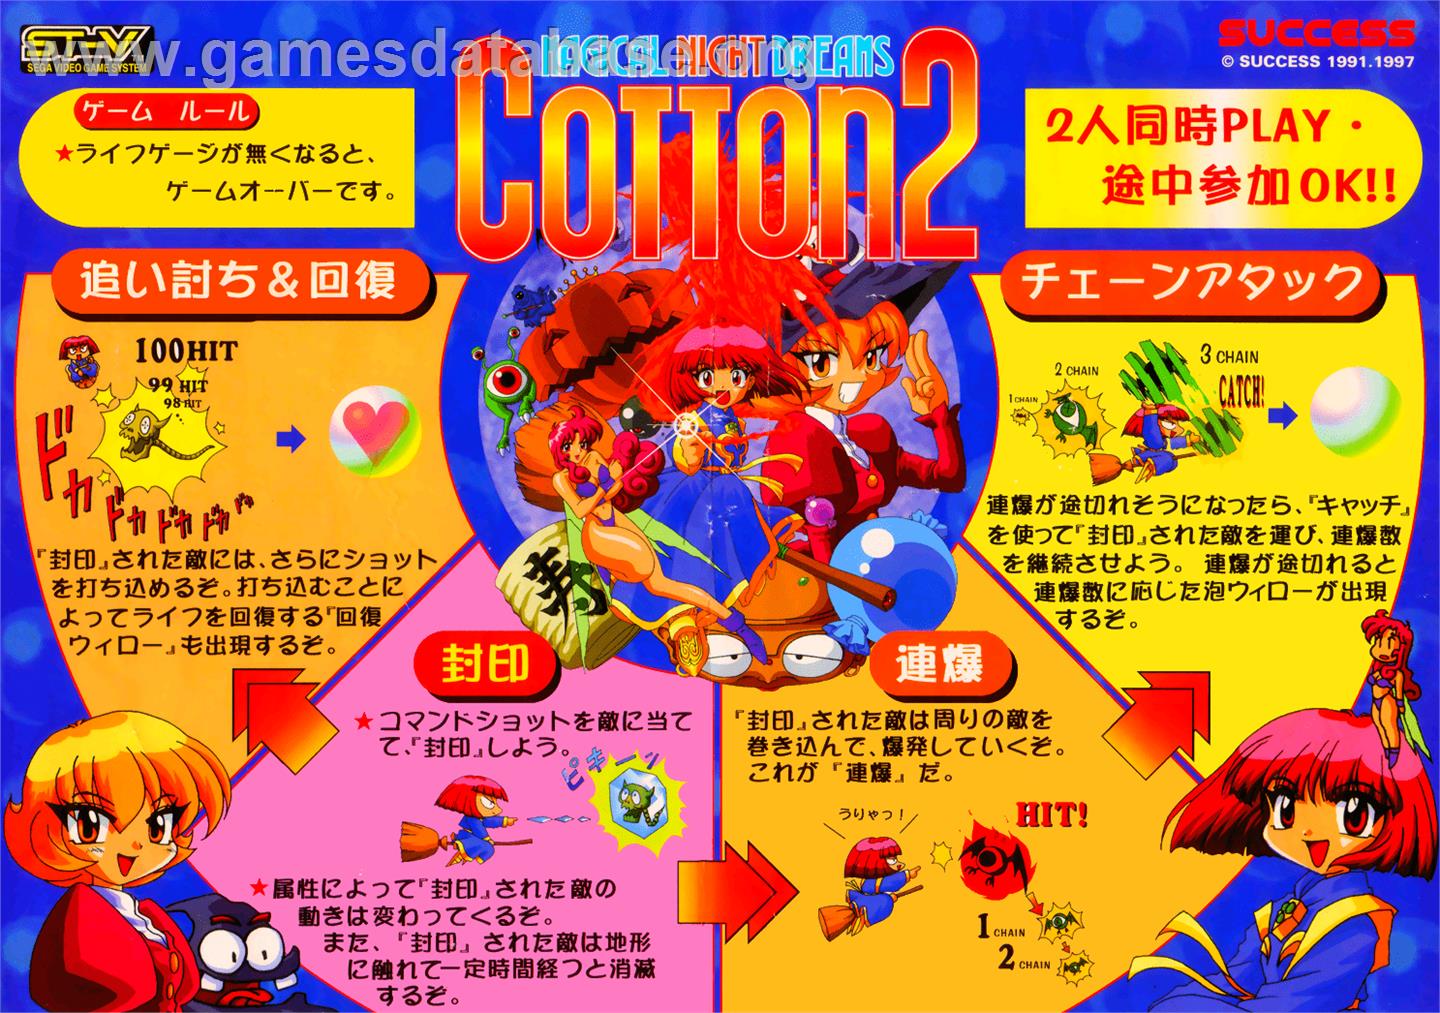 Cotton 2 - Sega ST-V - Artwork - Advert